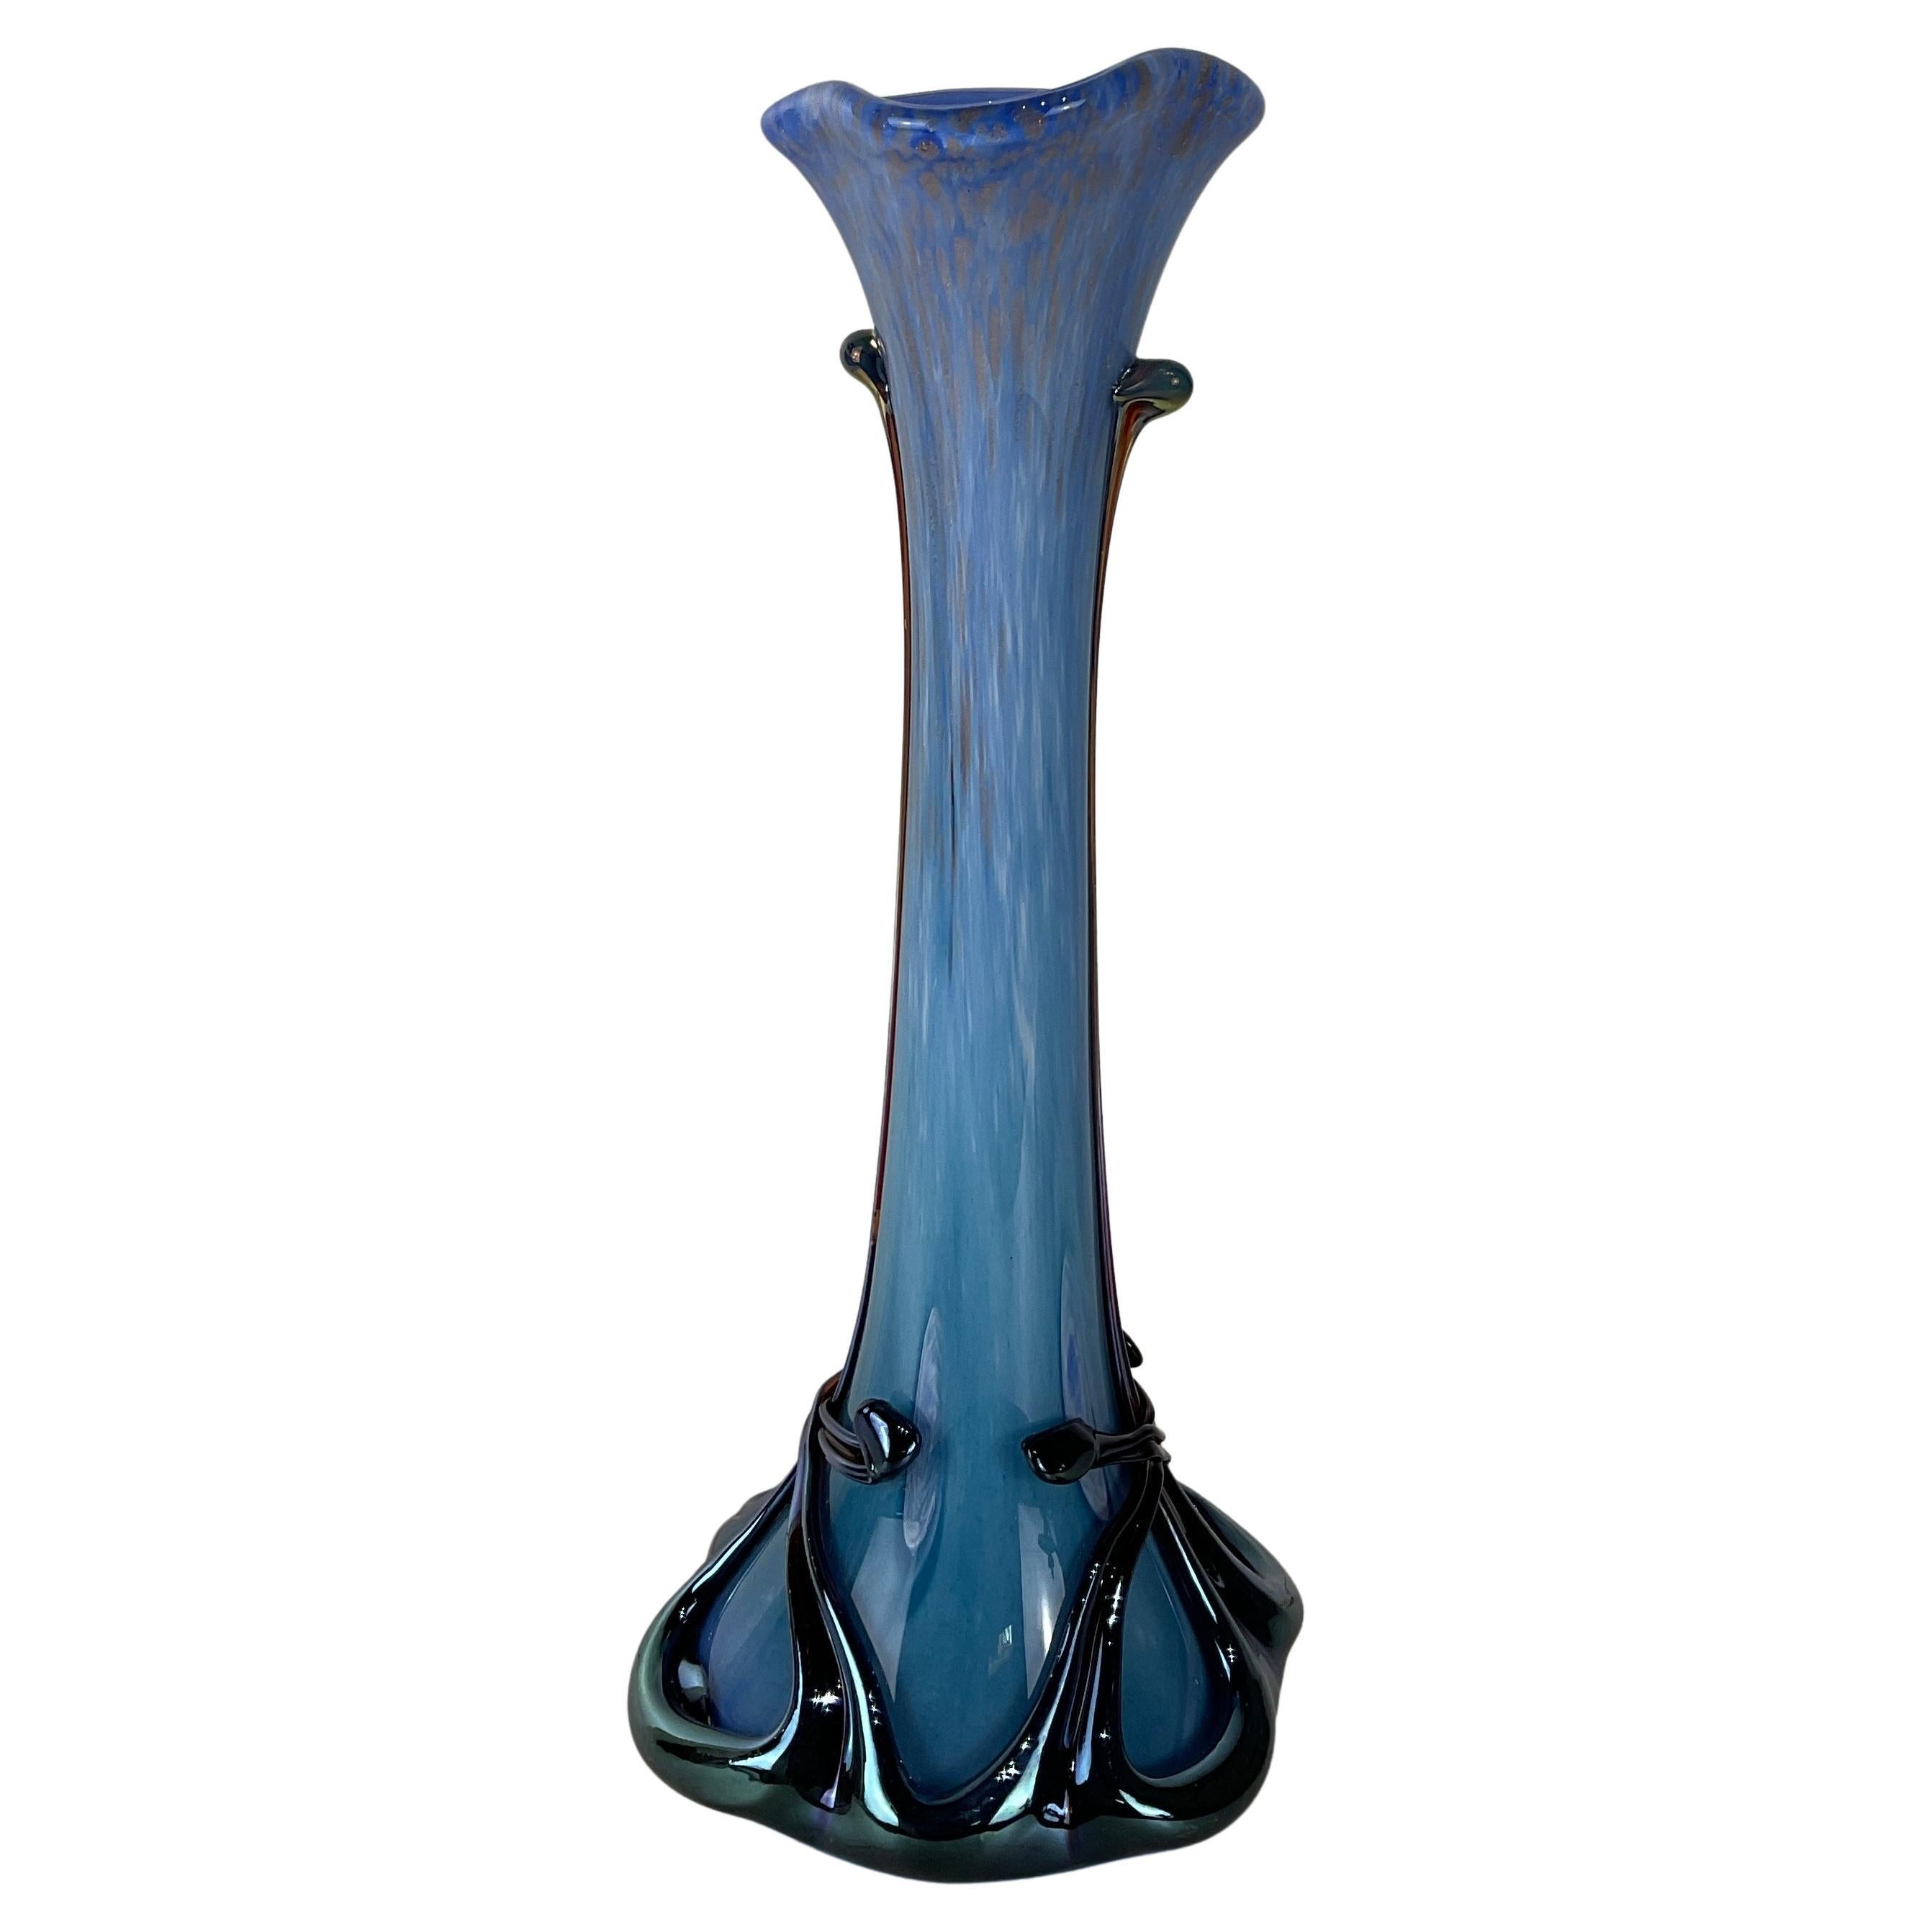 French Deco Art Glass Vase Signed Jean Michel Operto